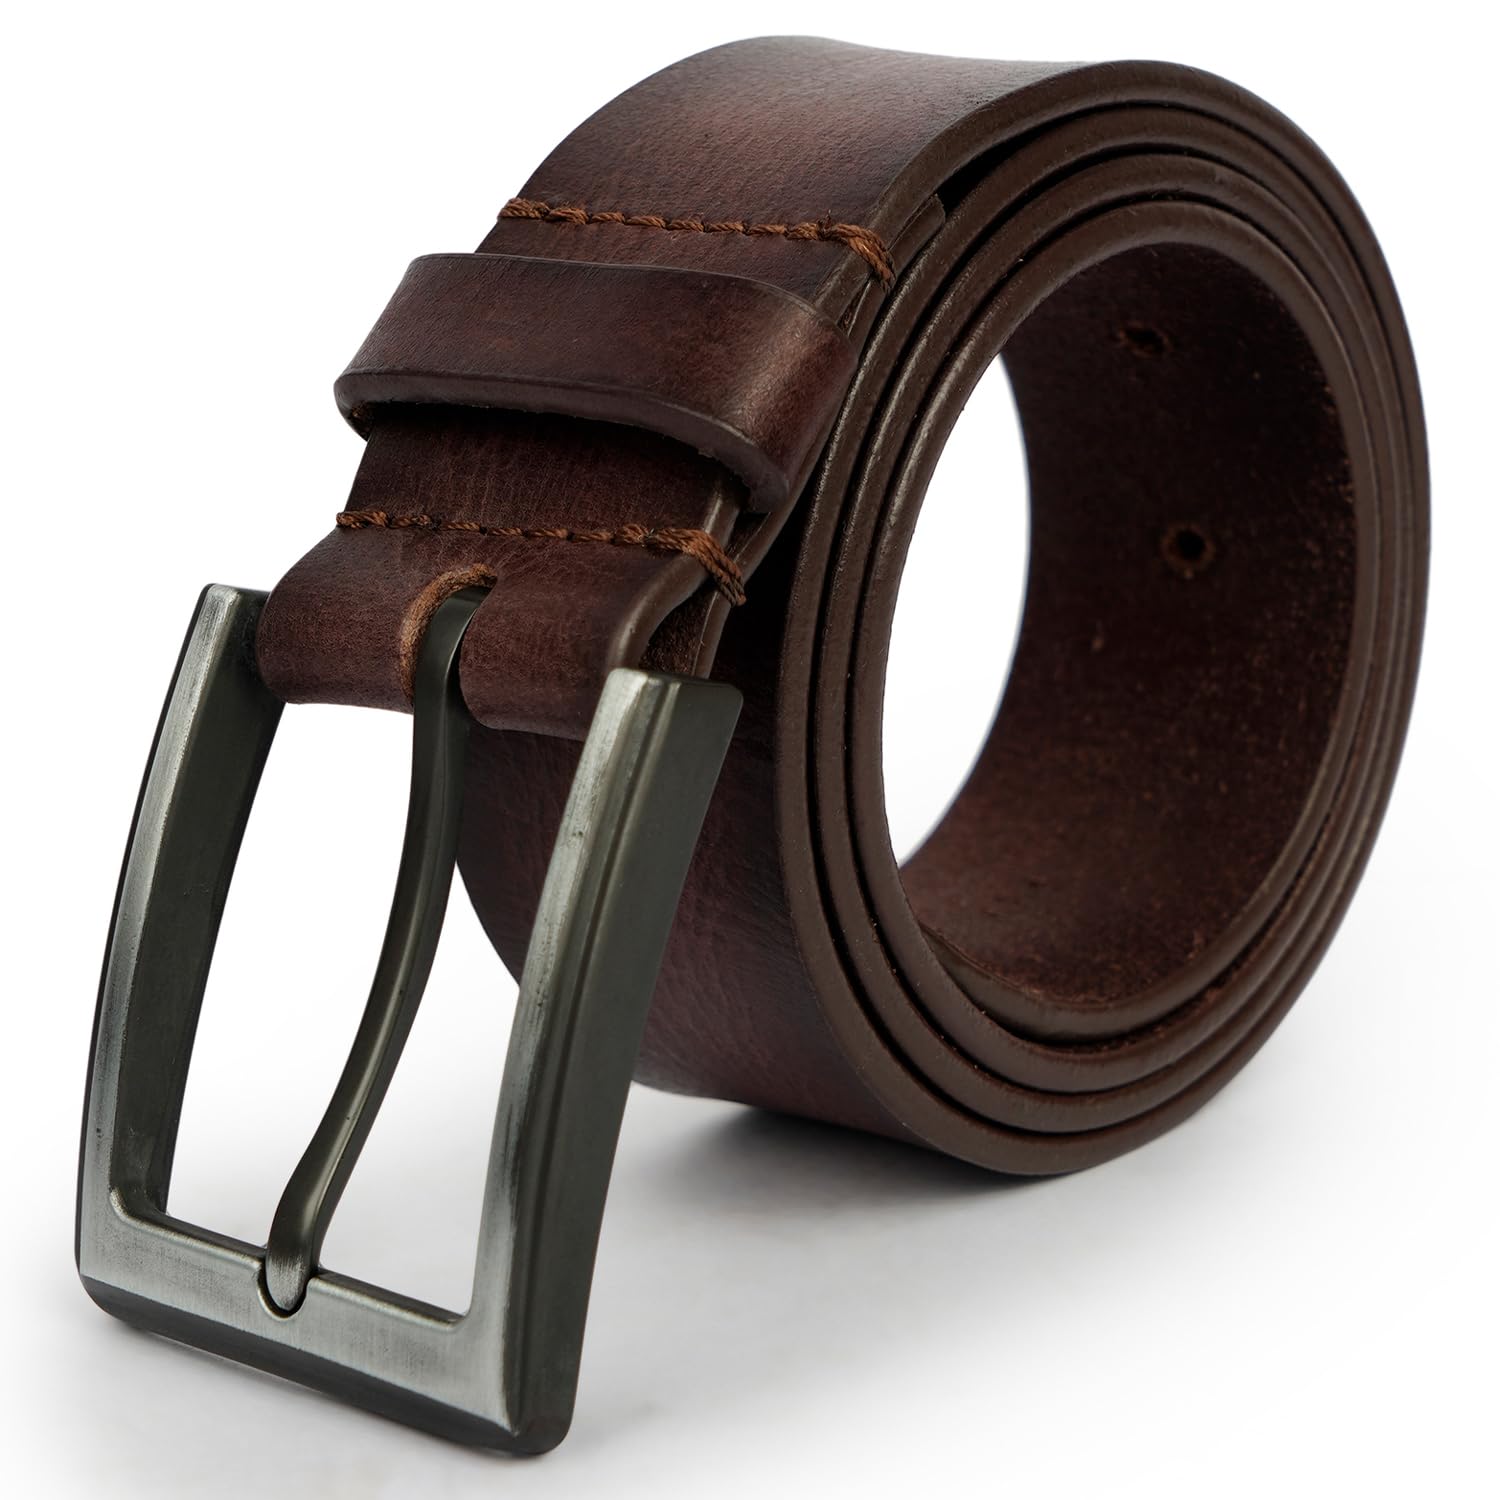 CIMONI® Premium Genuine Leather Belt for Men Belt (Color - Brown) ( 1 Year Gurantee)